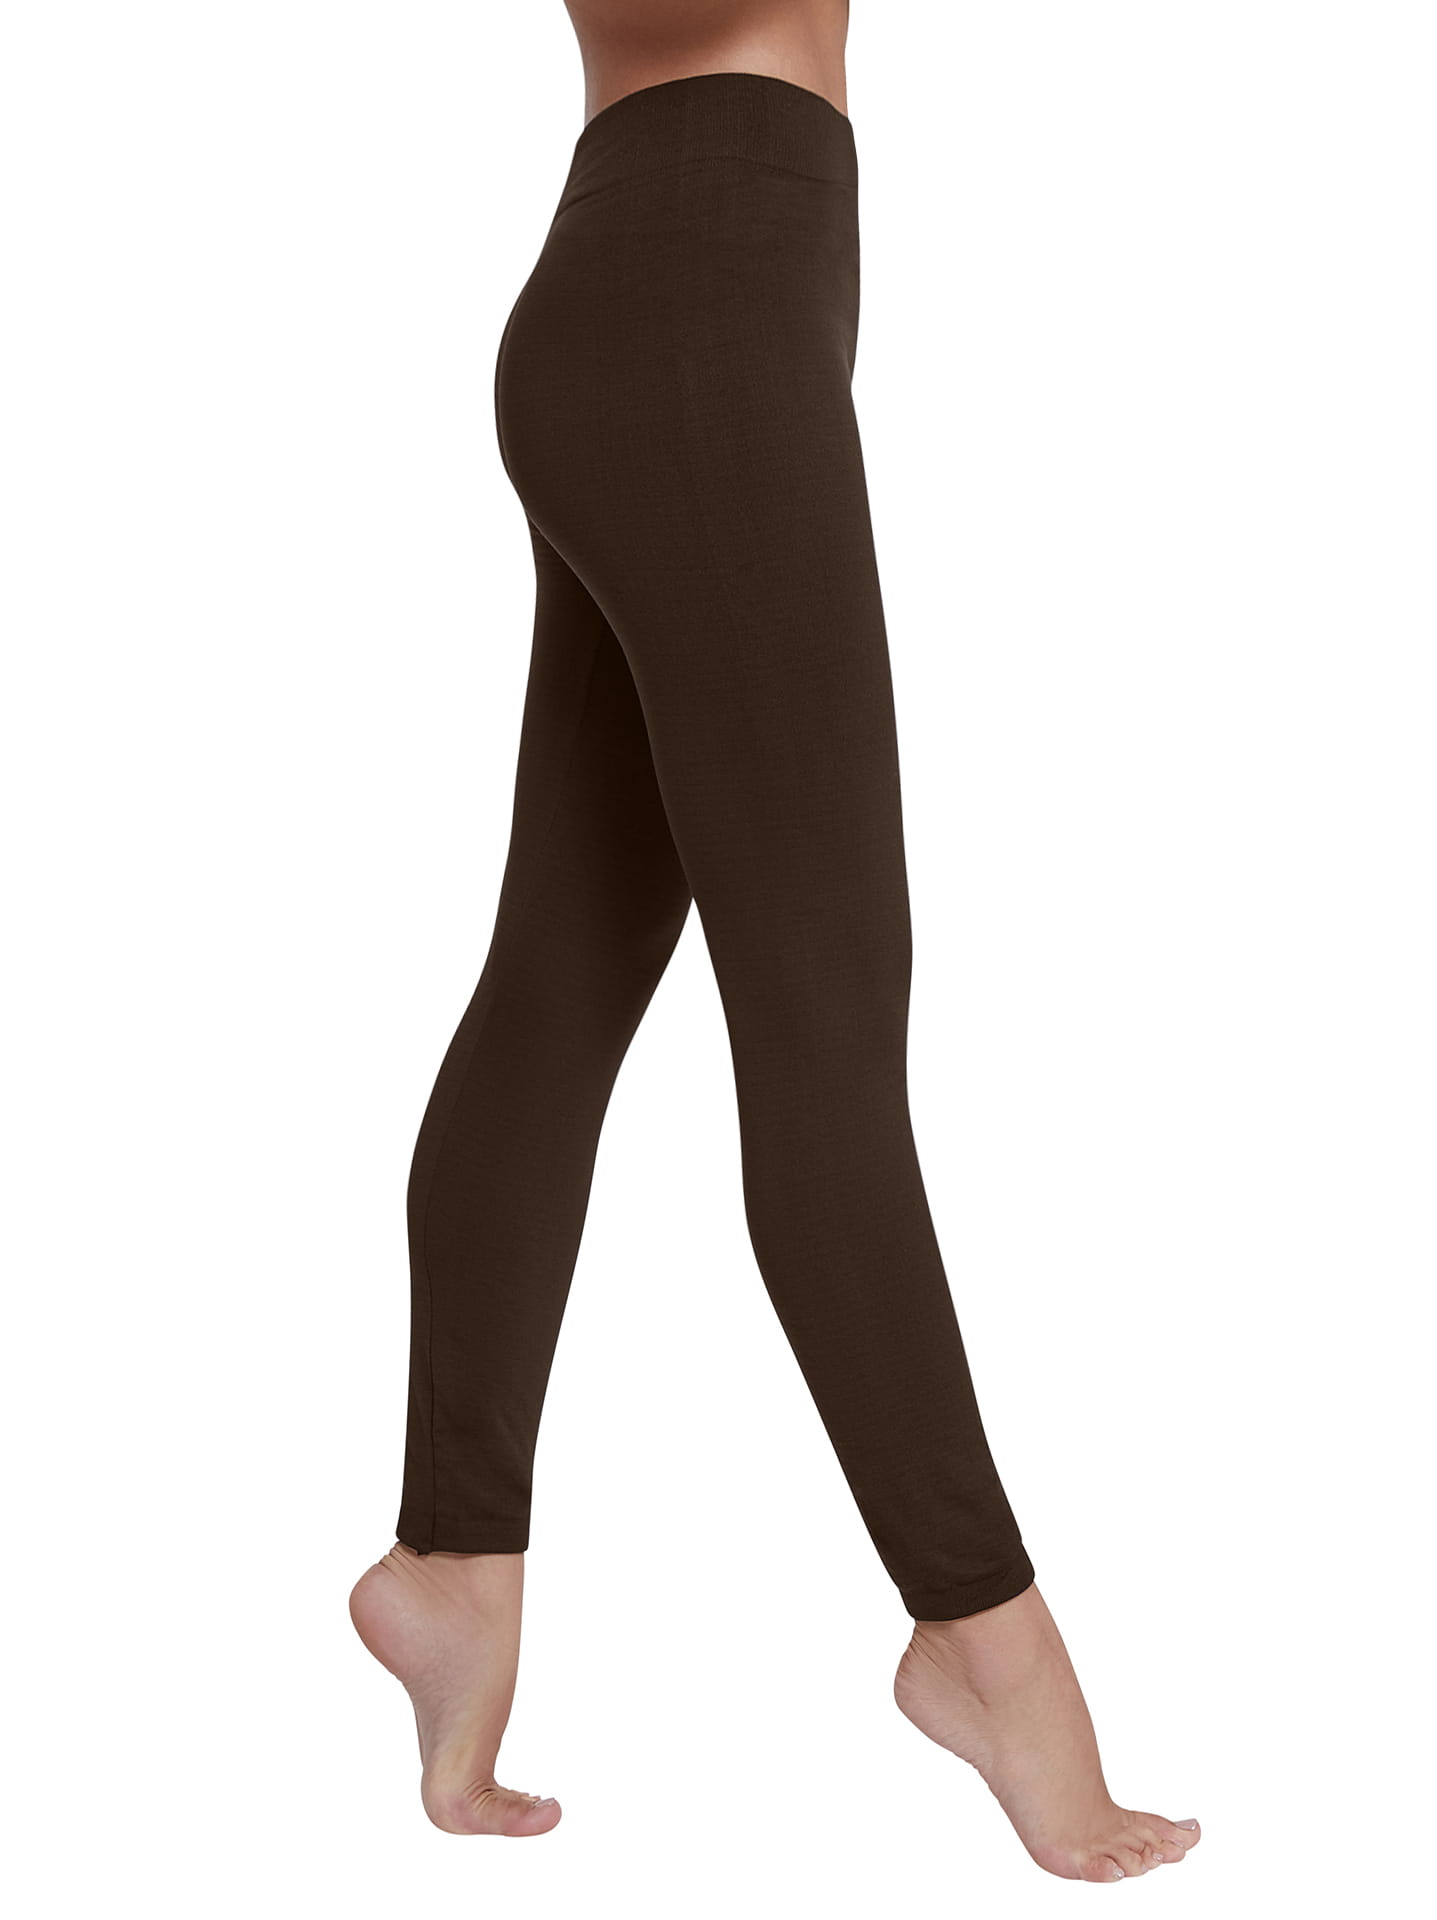 Elastic thermal leggings curvy in light brown, 6.99€